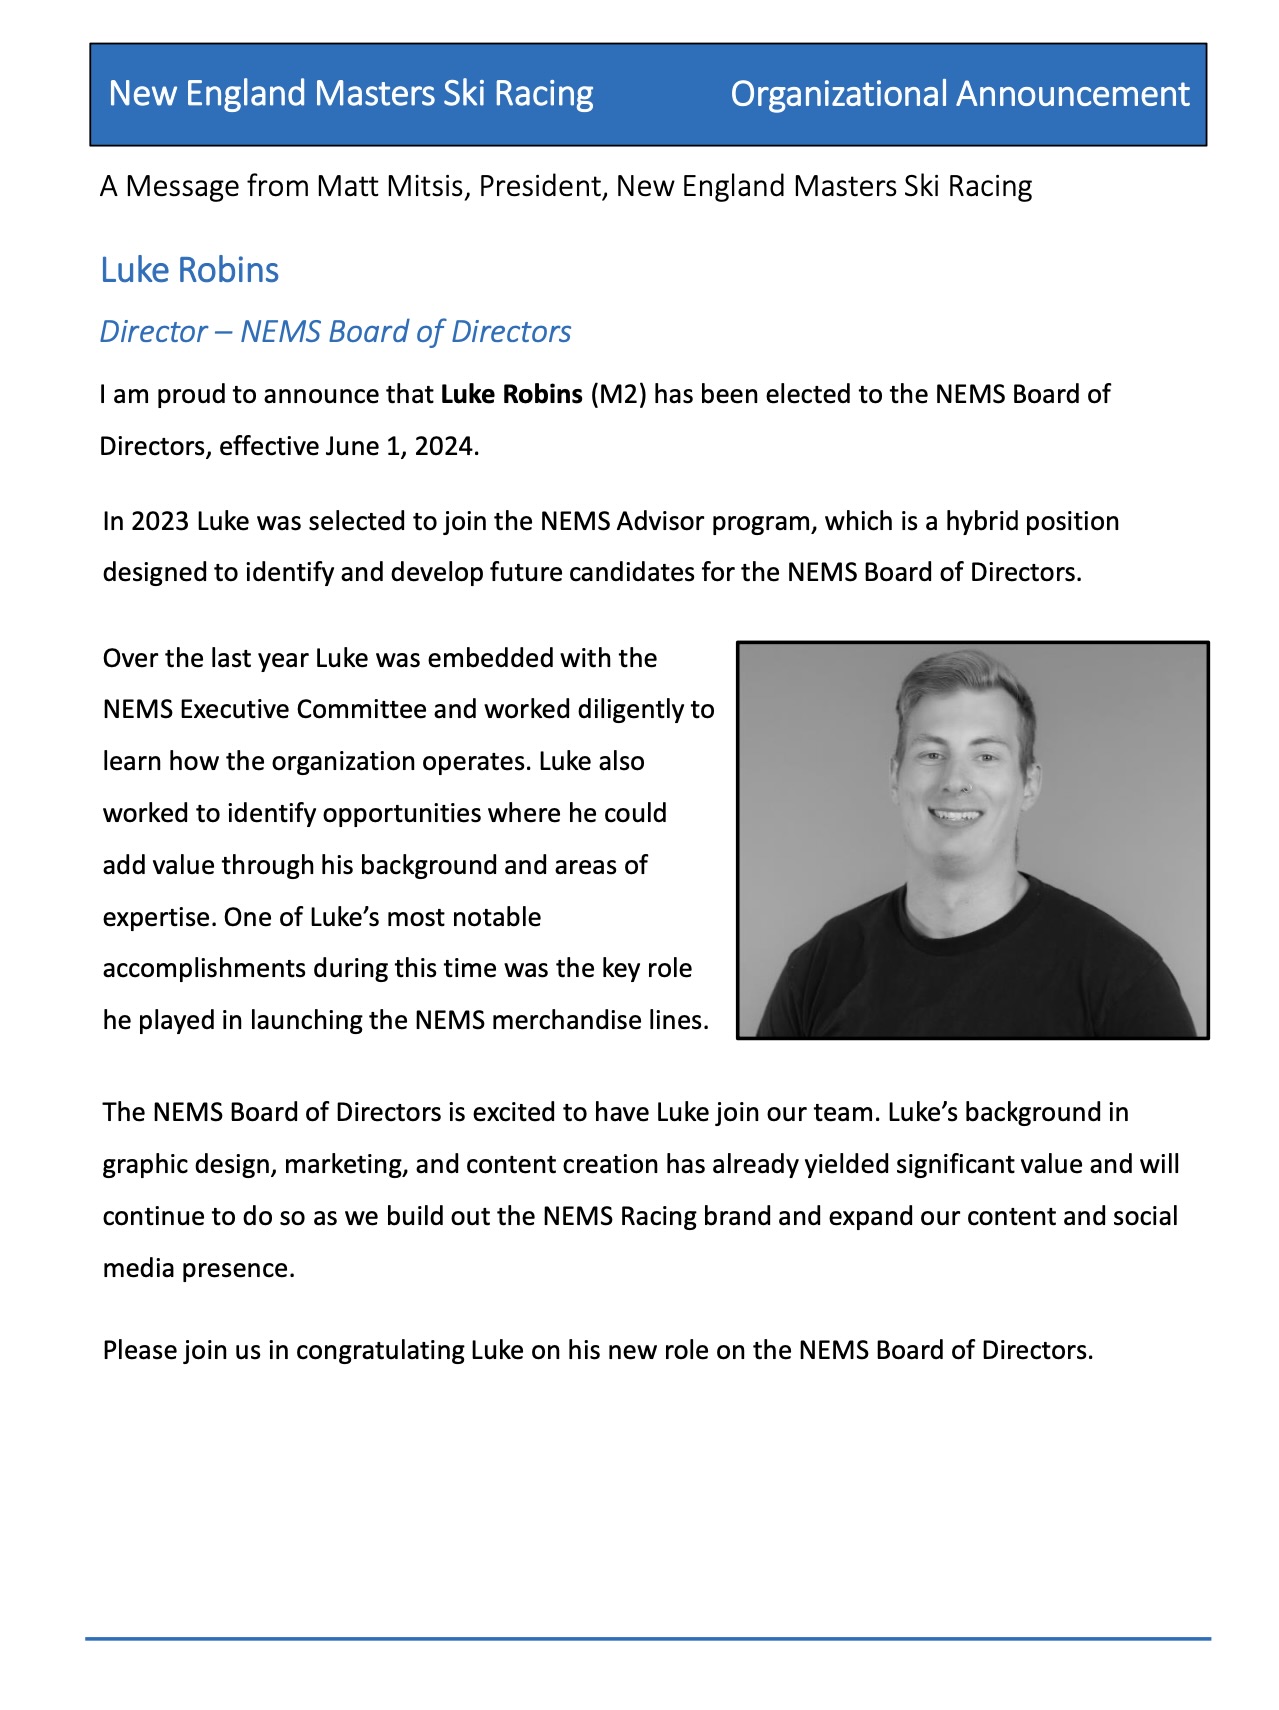 NEMS Org Announcement -  Luke Robins